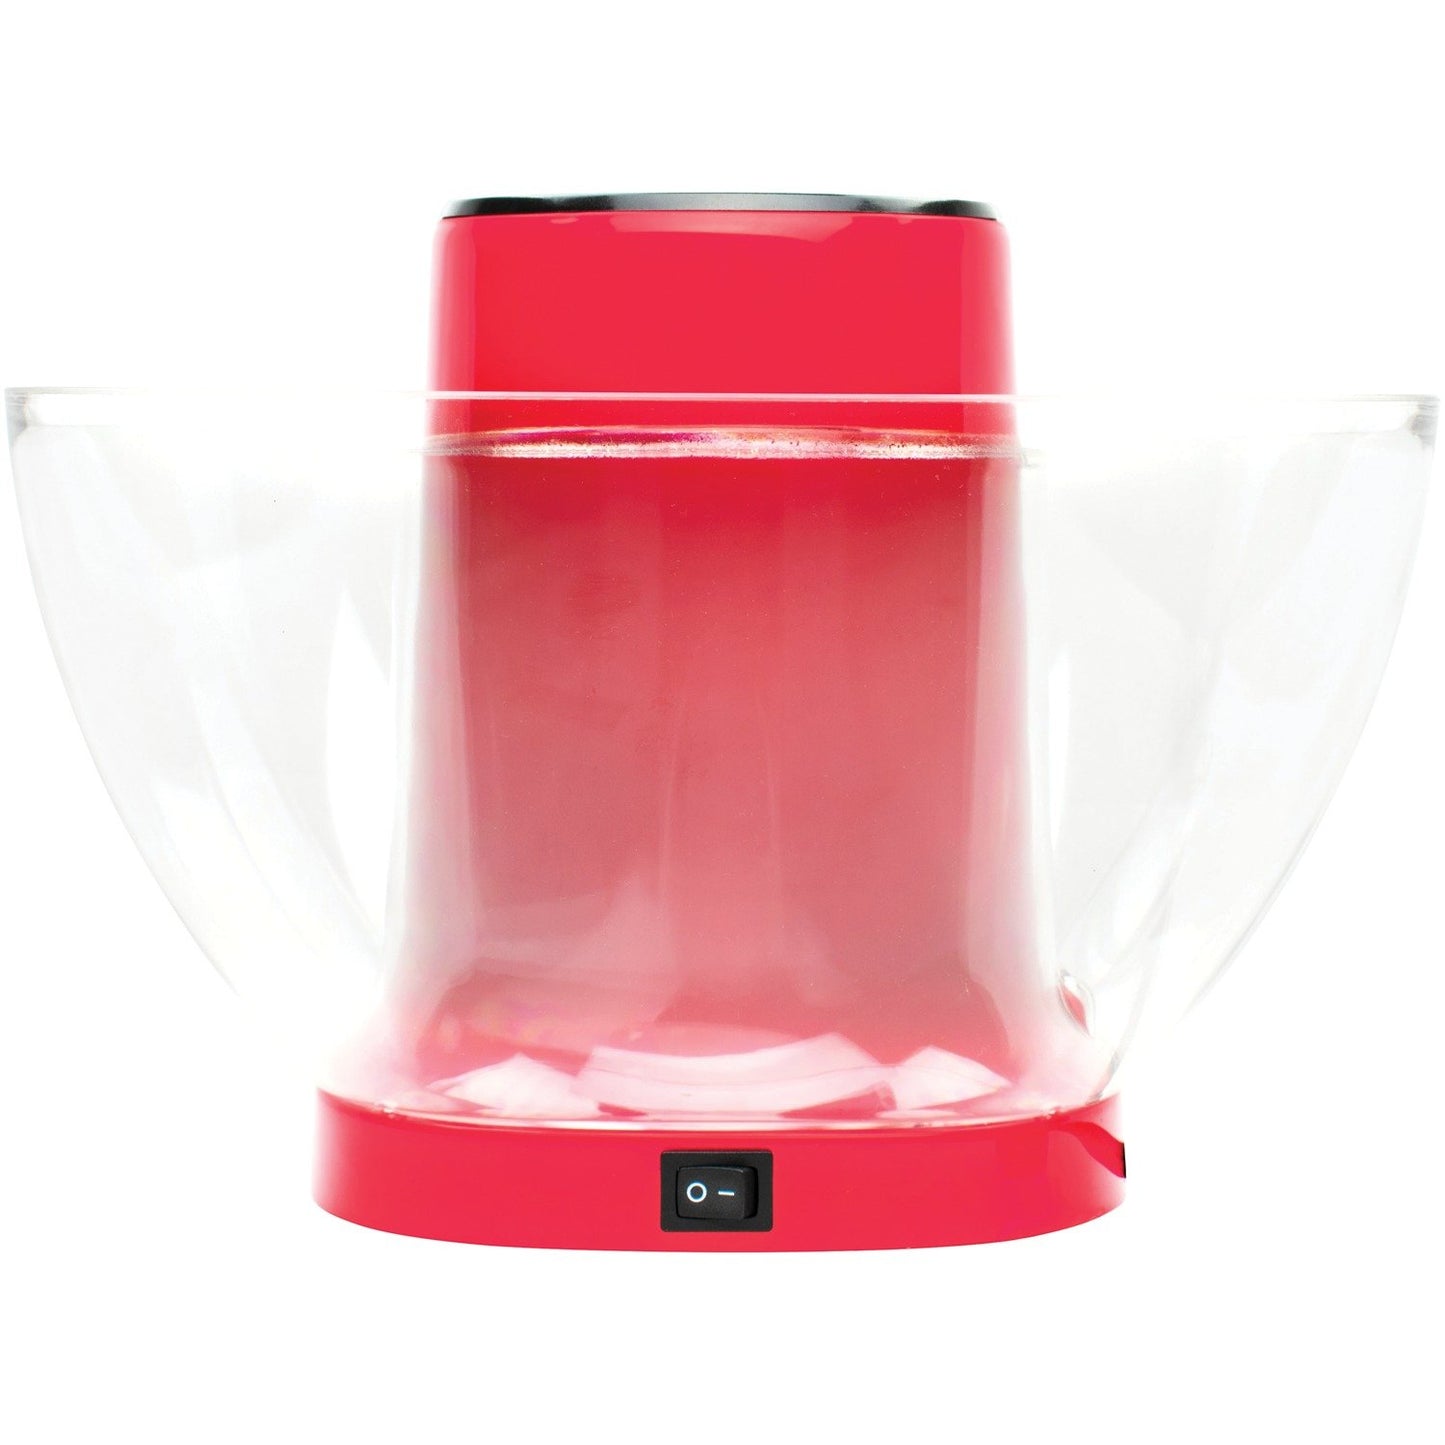 Brentwood Appl. PC-490R Jumbo 24-Cup Hot-Air Popcorn Maker